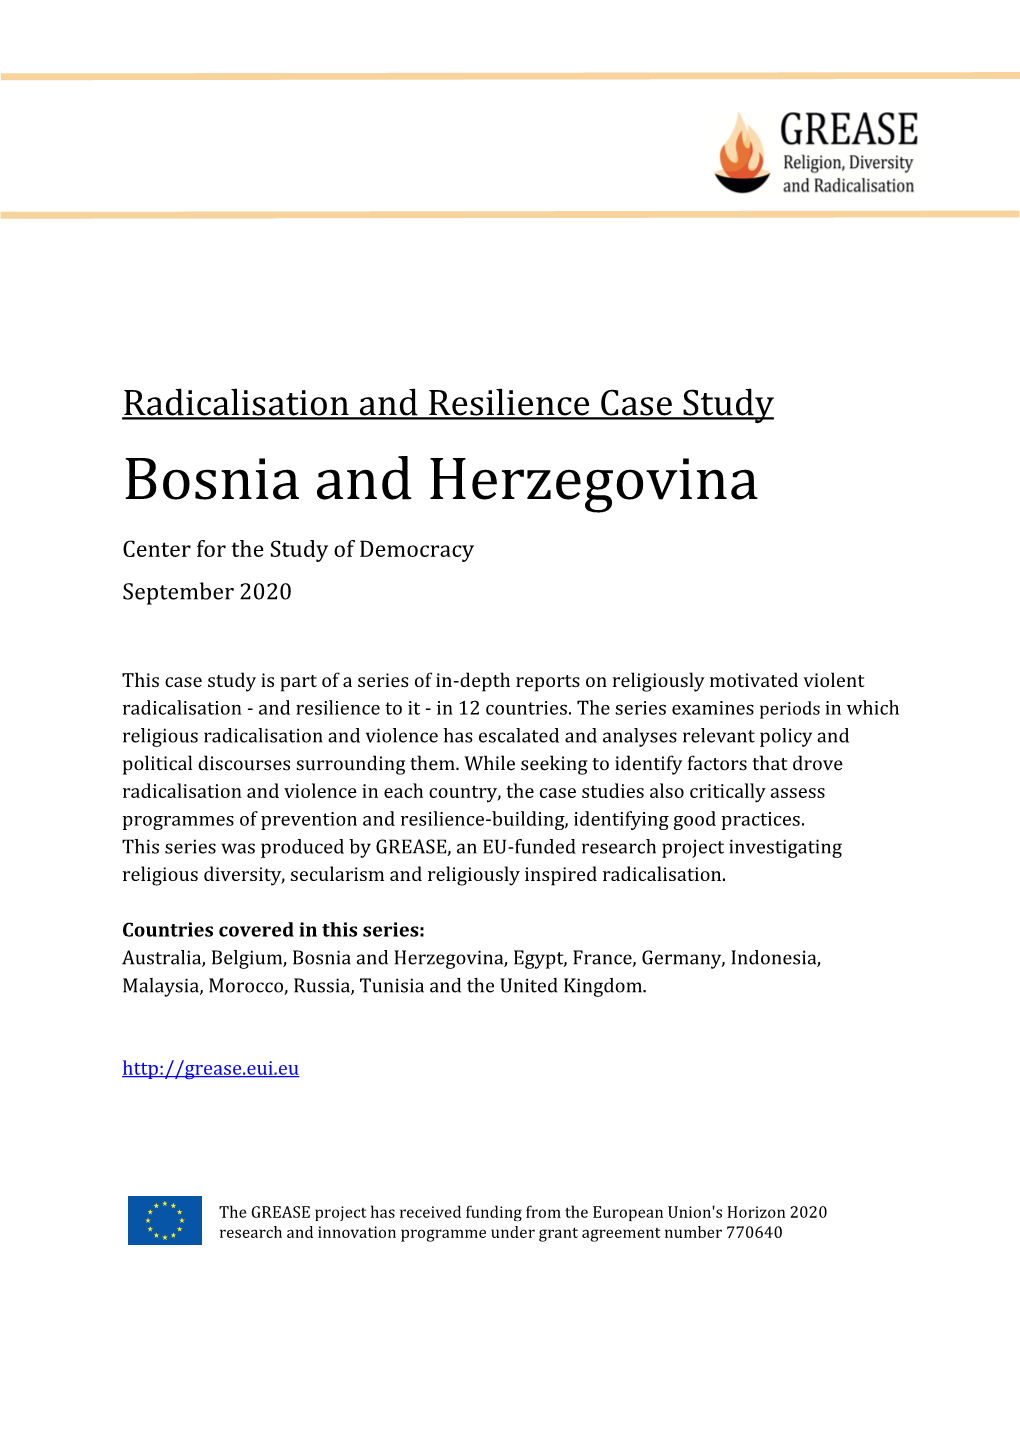 Bosnia and Herzegovina Center for the Study of Democracy September 2020